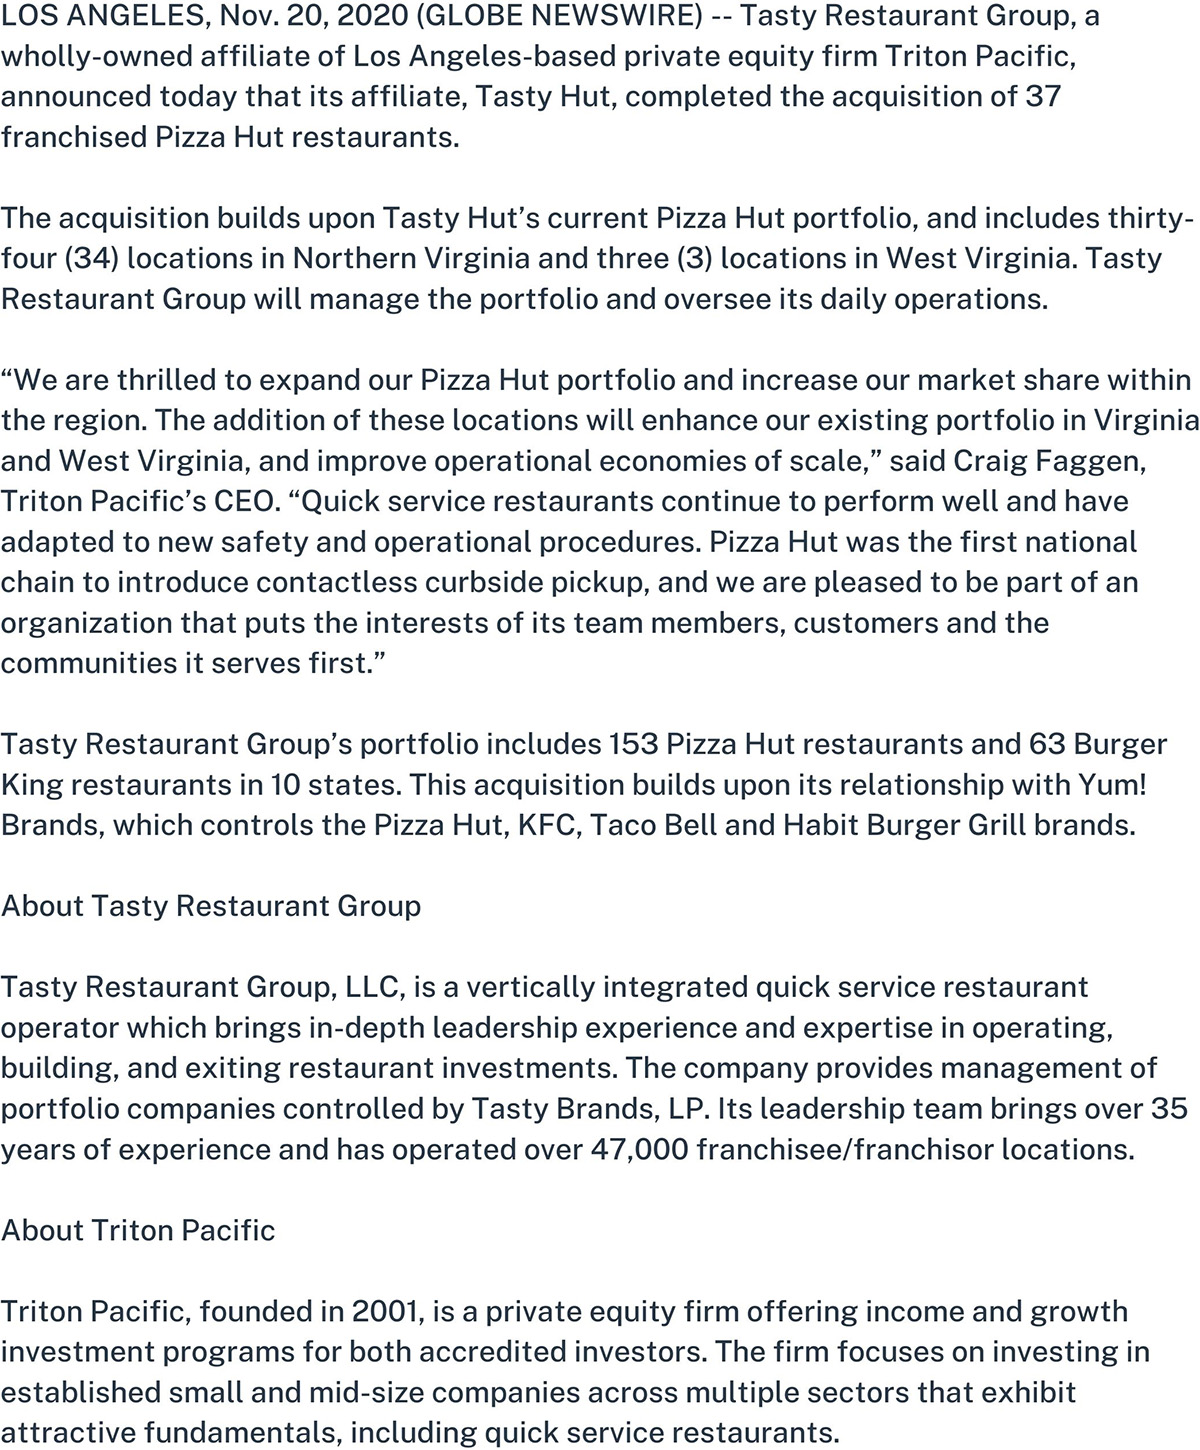 Tasty Restaurant Group to Acquire Portfolio of 37 Pizza Hut Restaurants